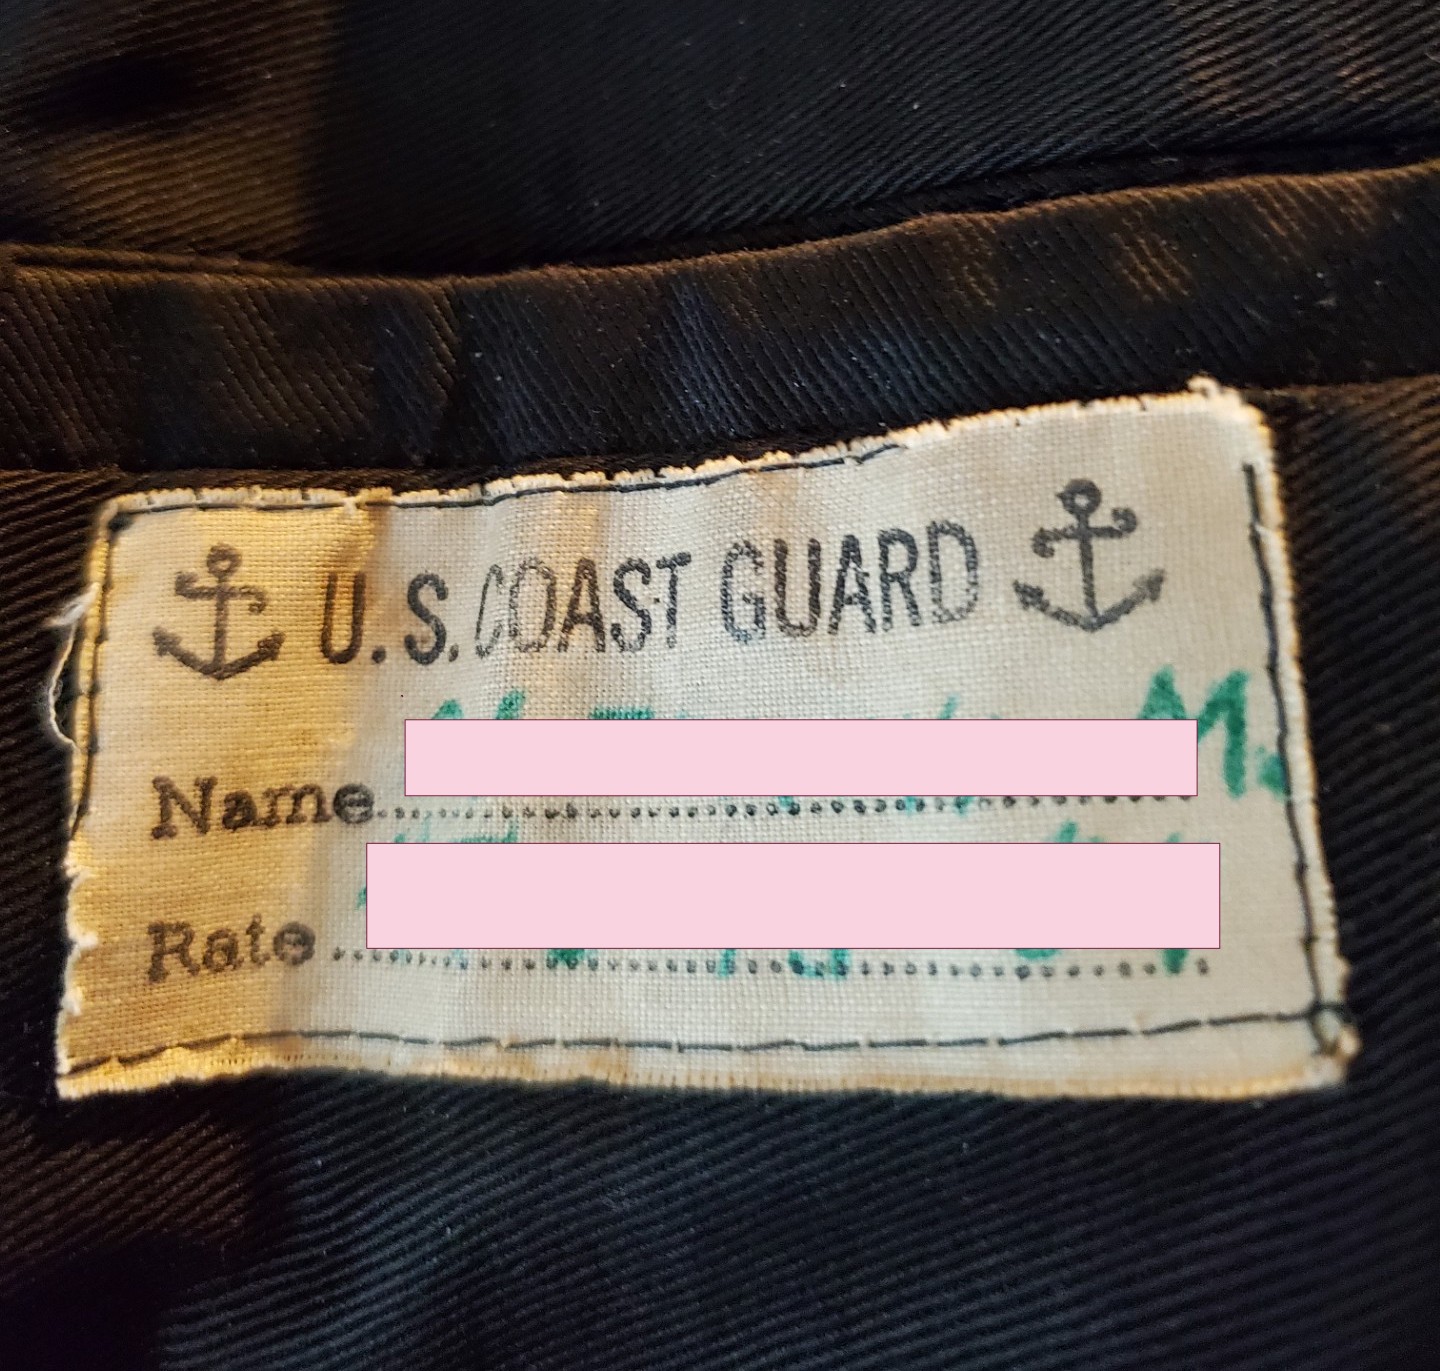 Coast Guard Tag copy.jpg